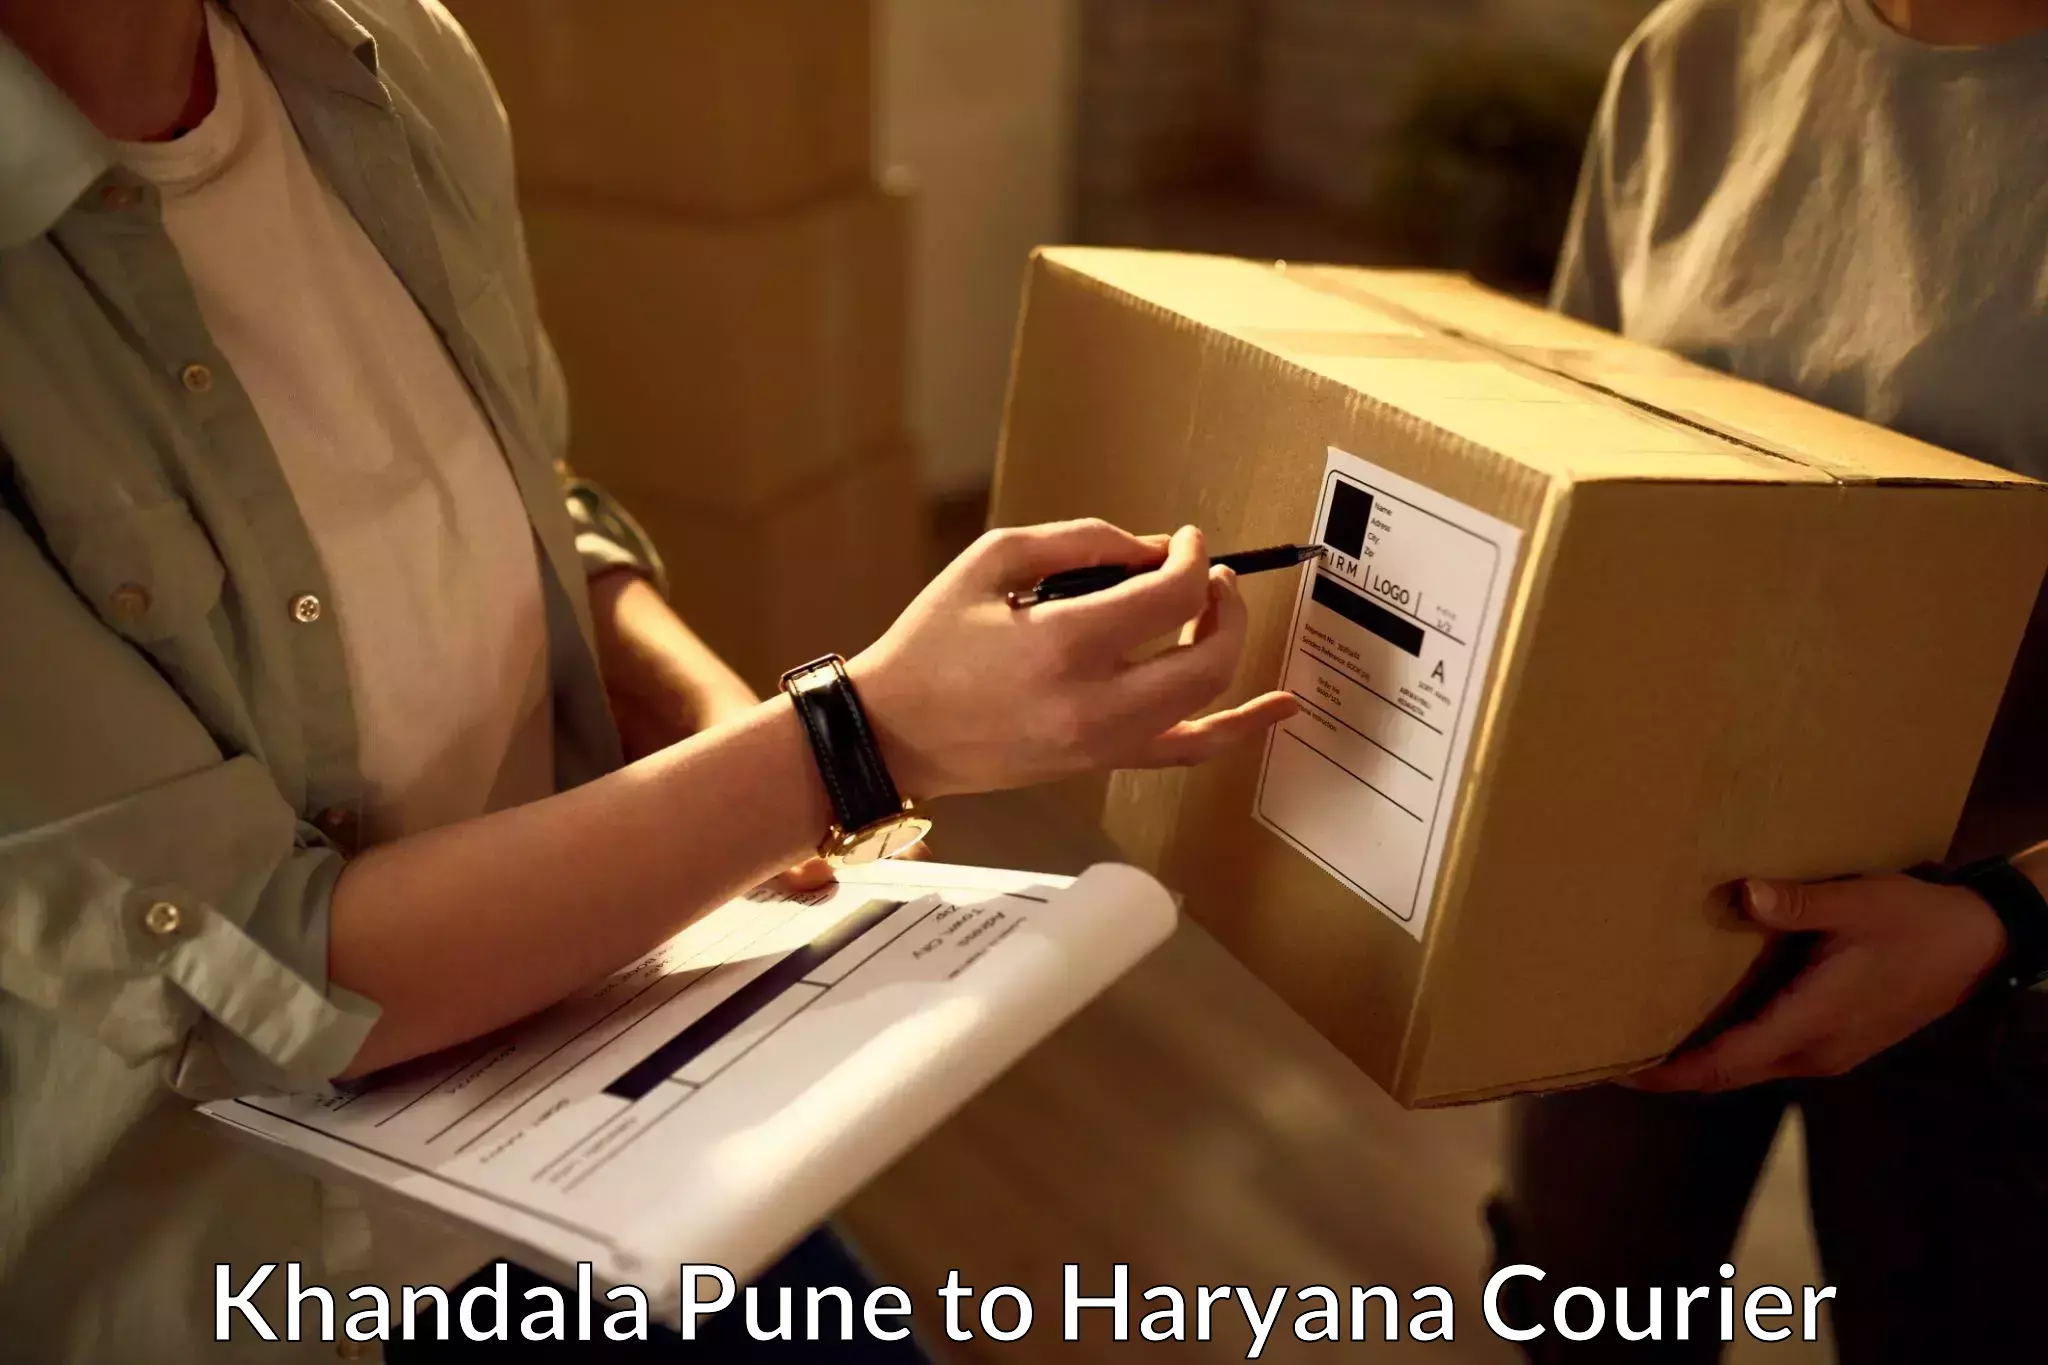 Courier membership Khandala Pune to Pinjore